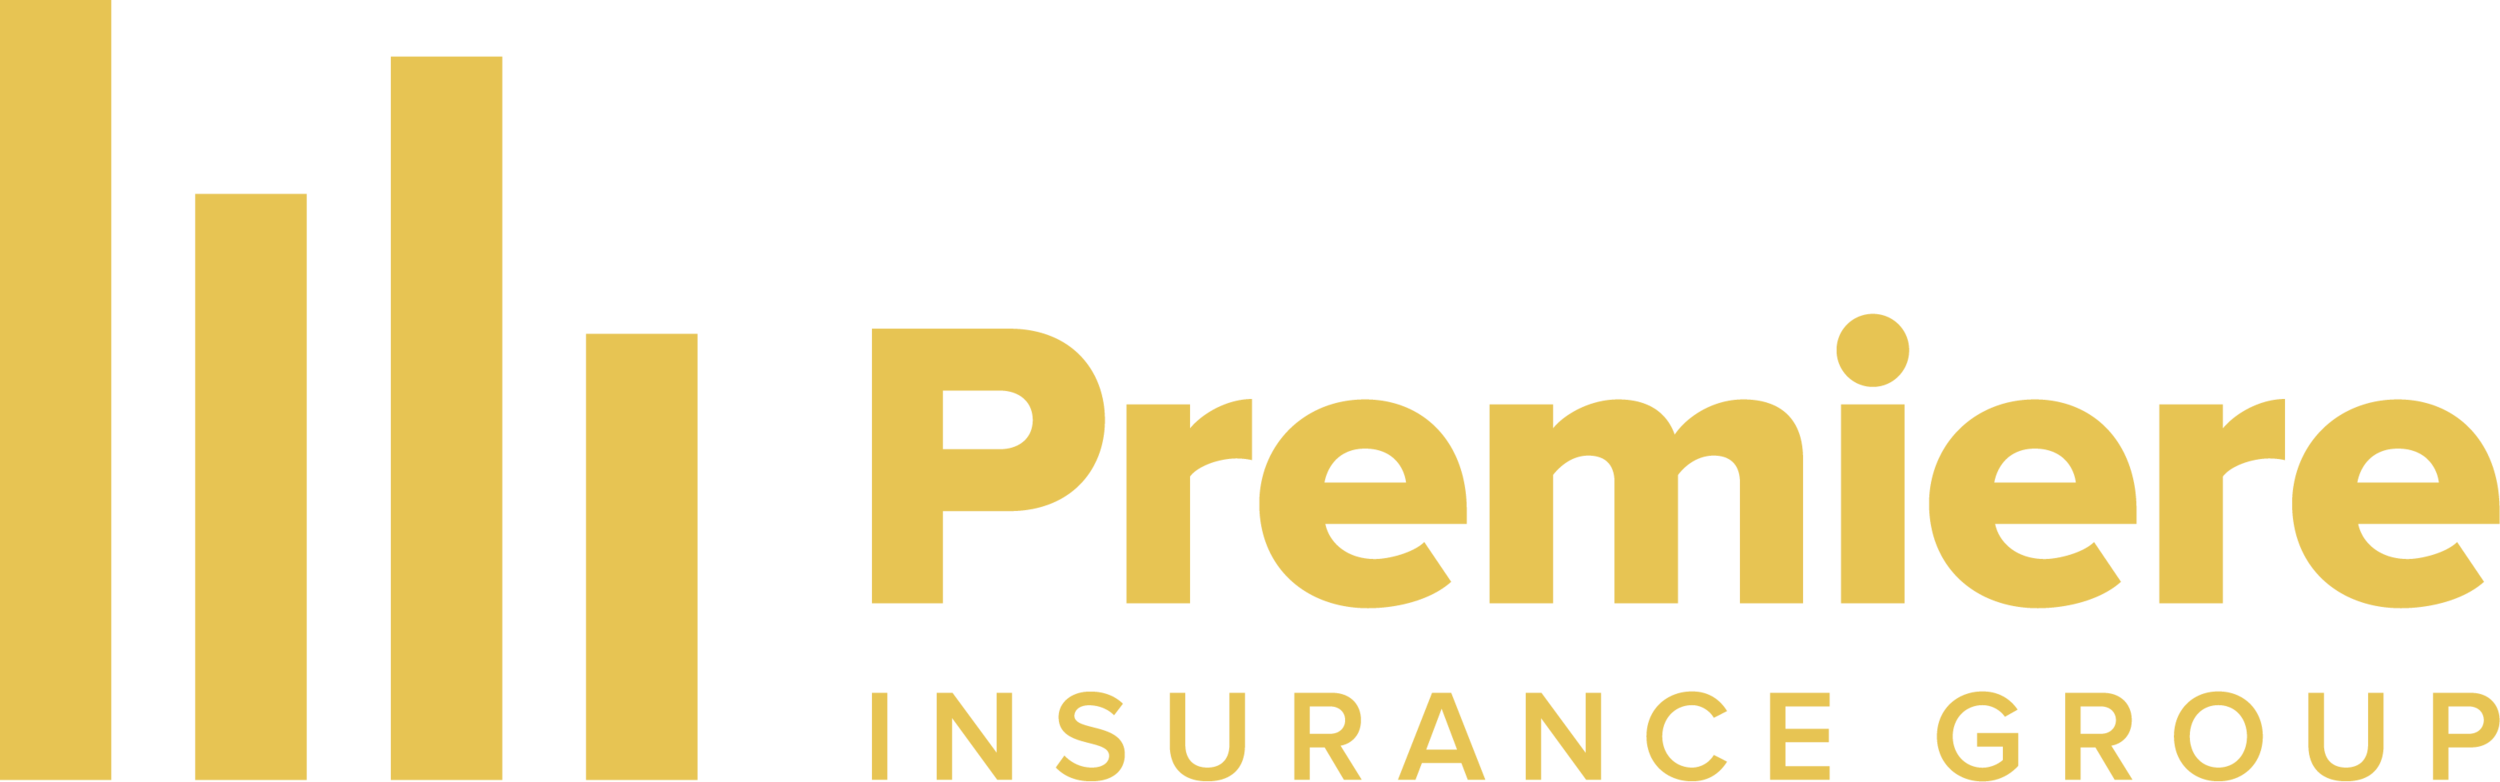 Premiere Insurance group